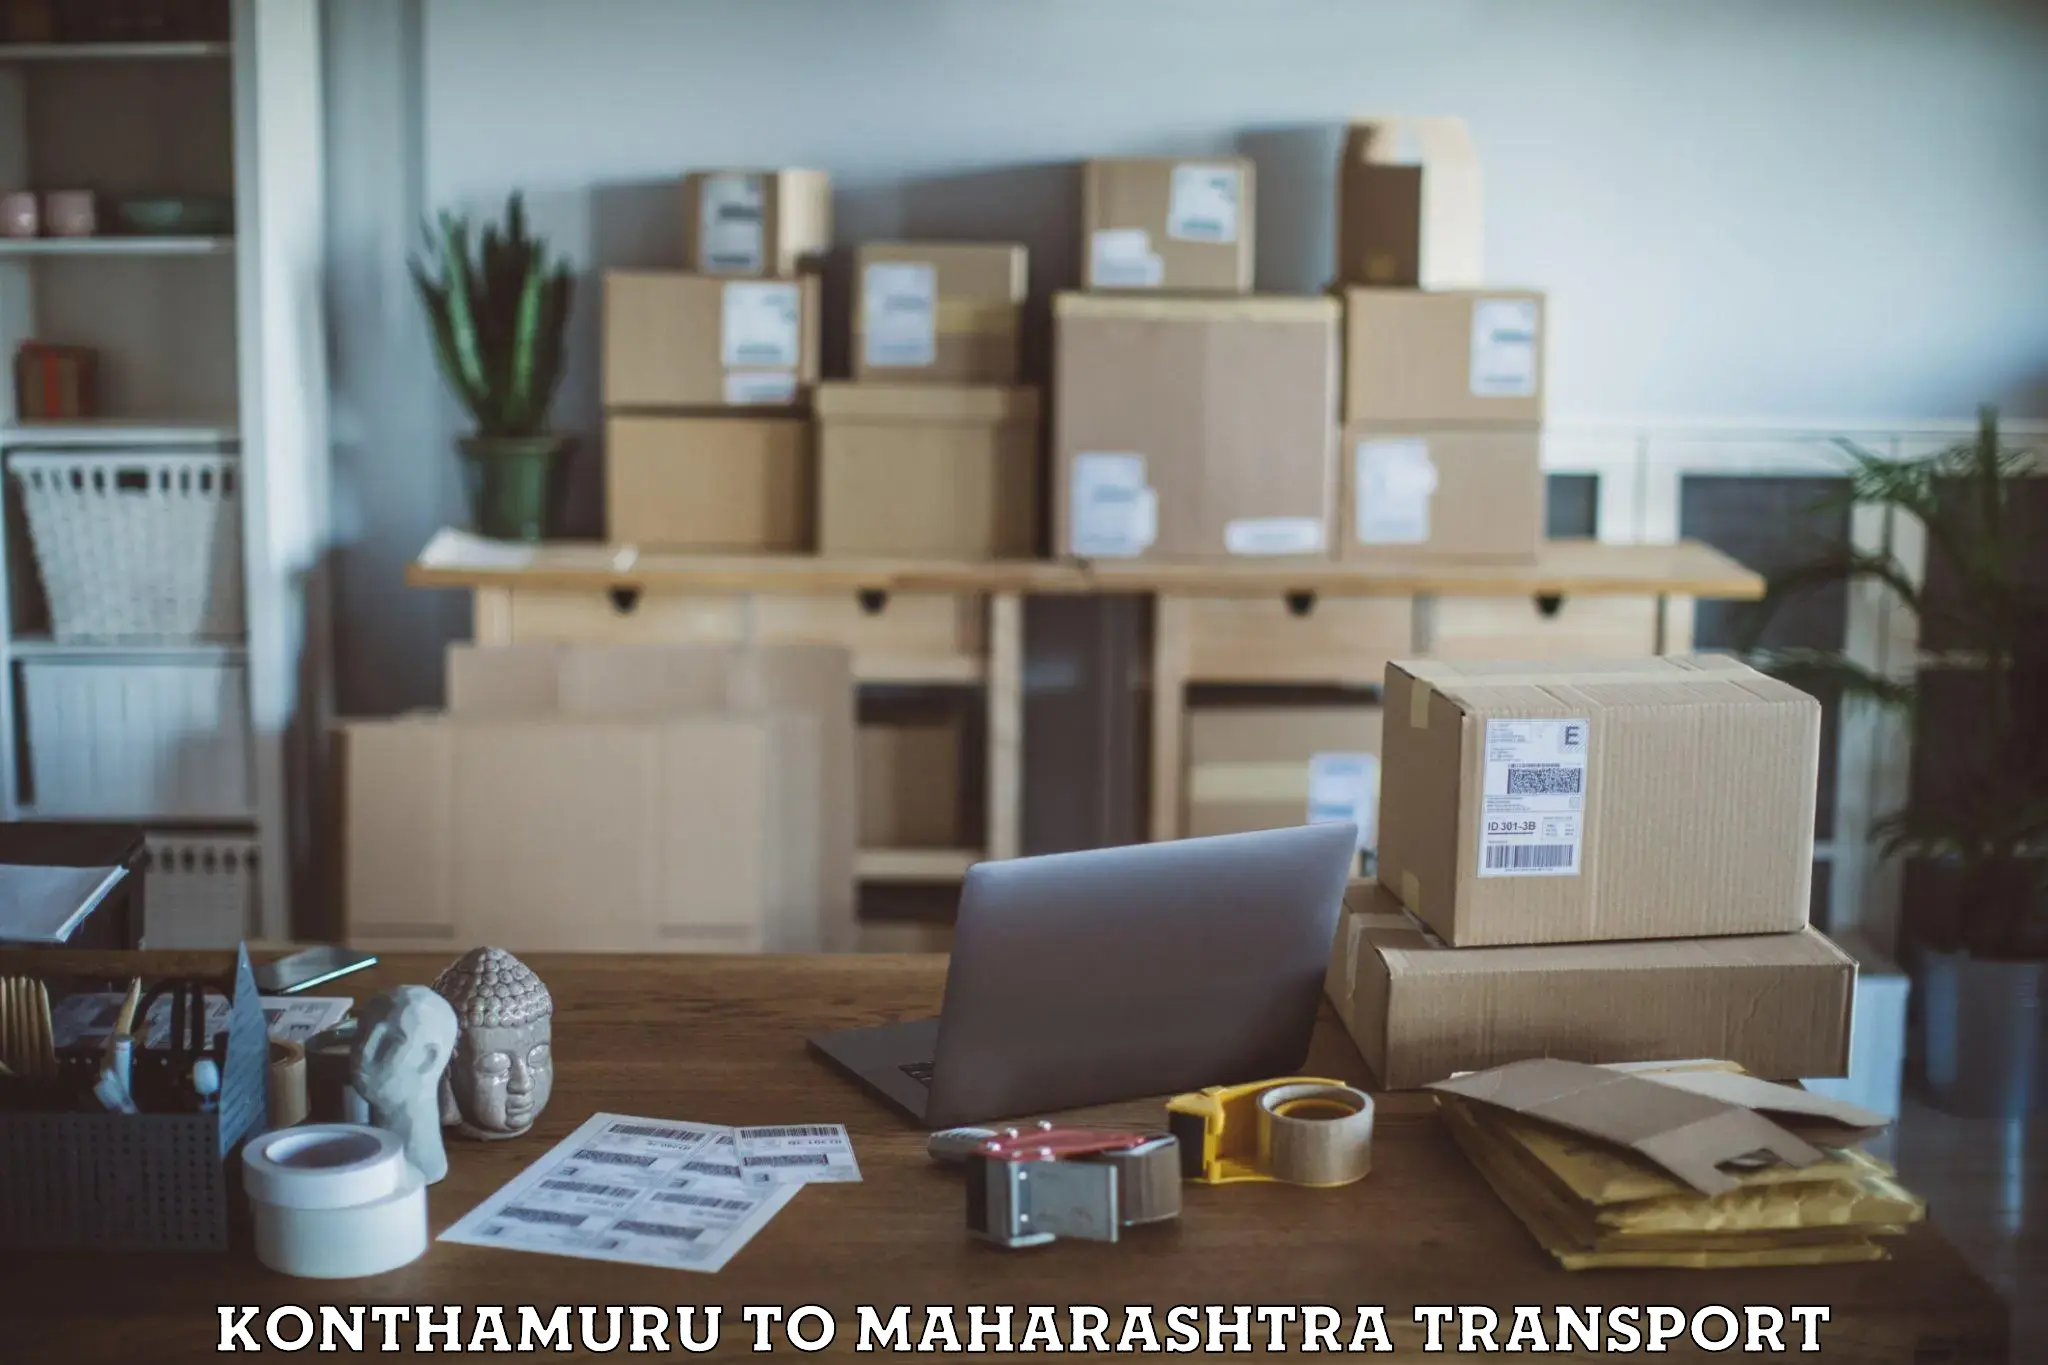 Part load transport service in India Konthamuru to Mahabaleshwar